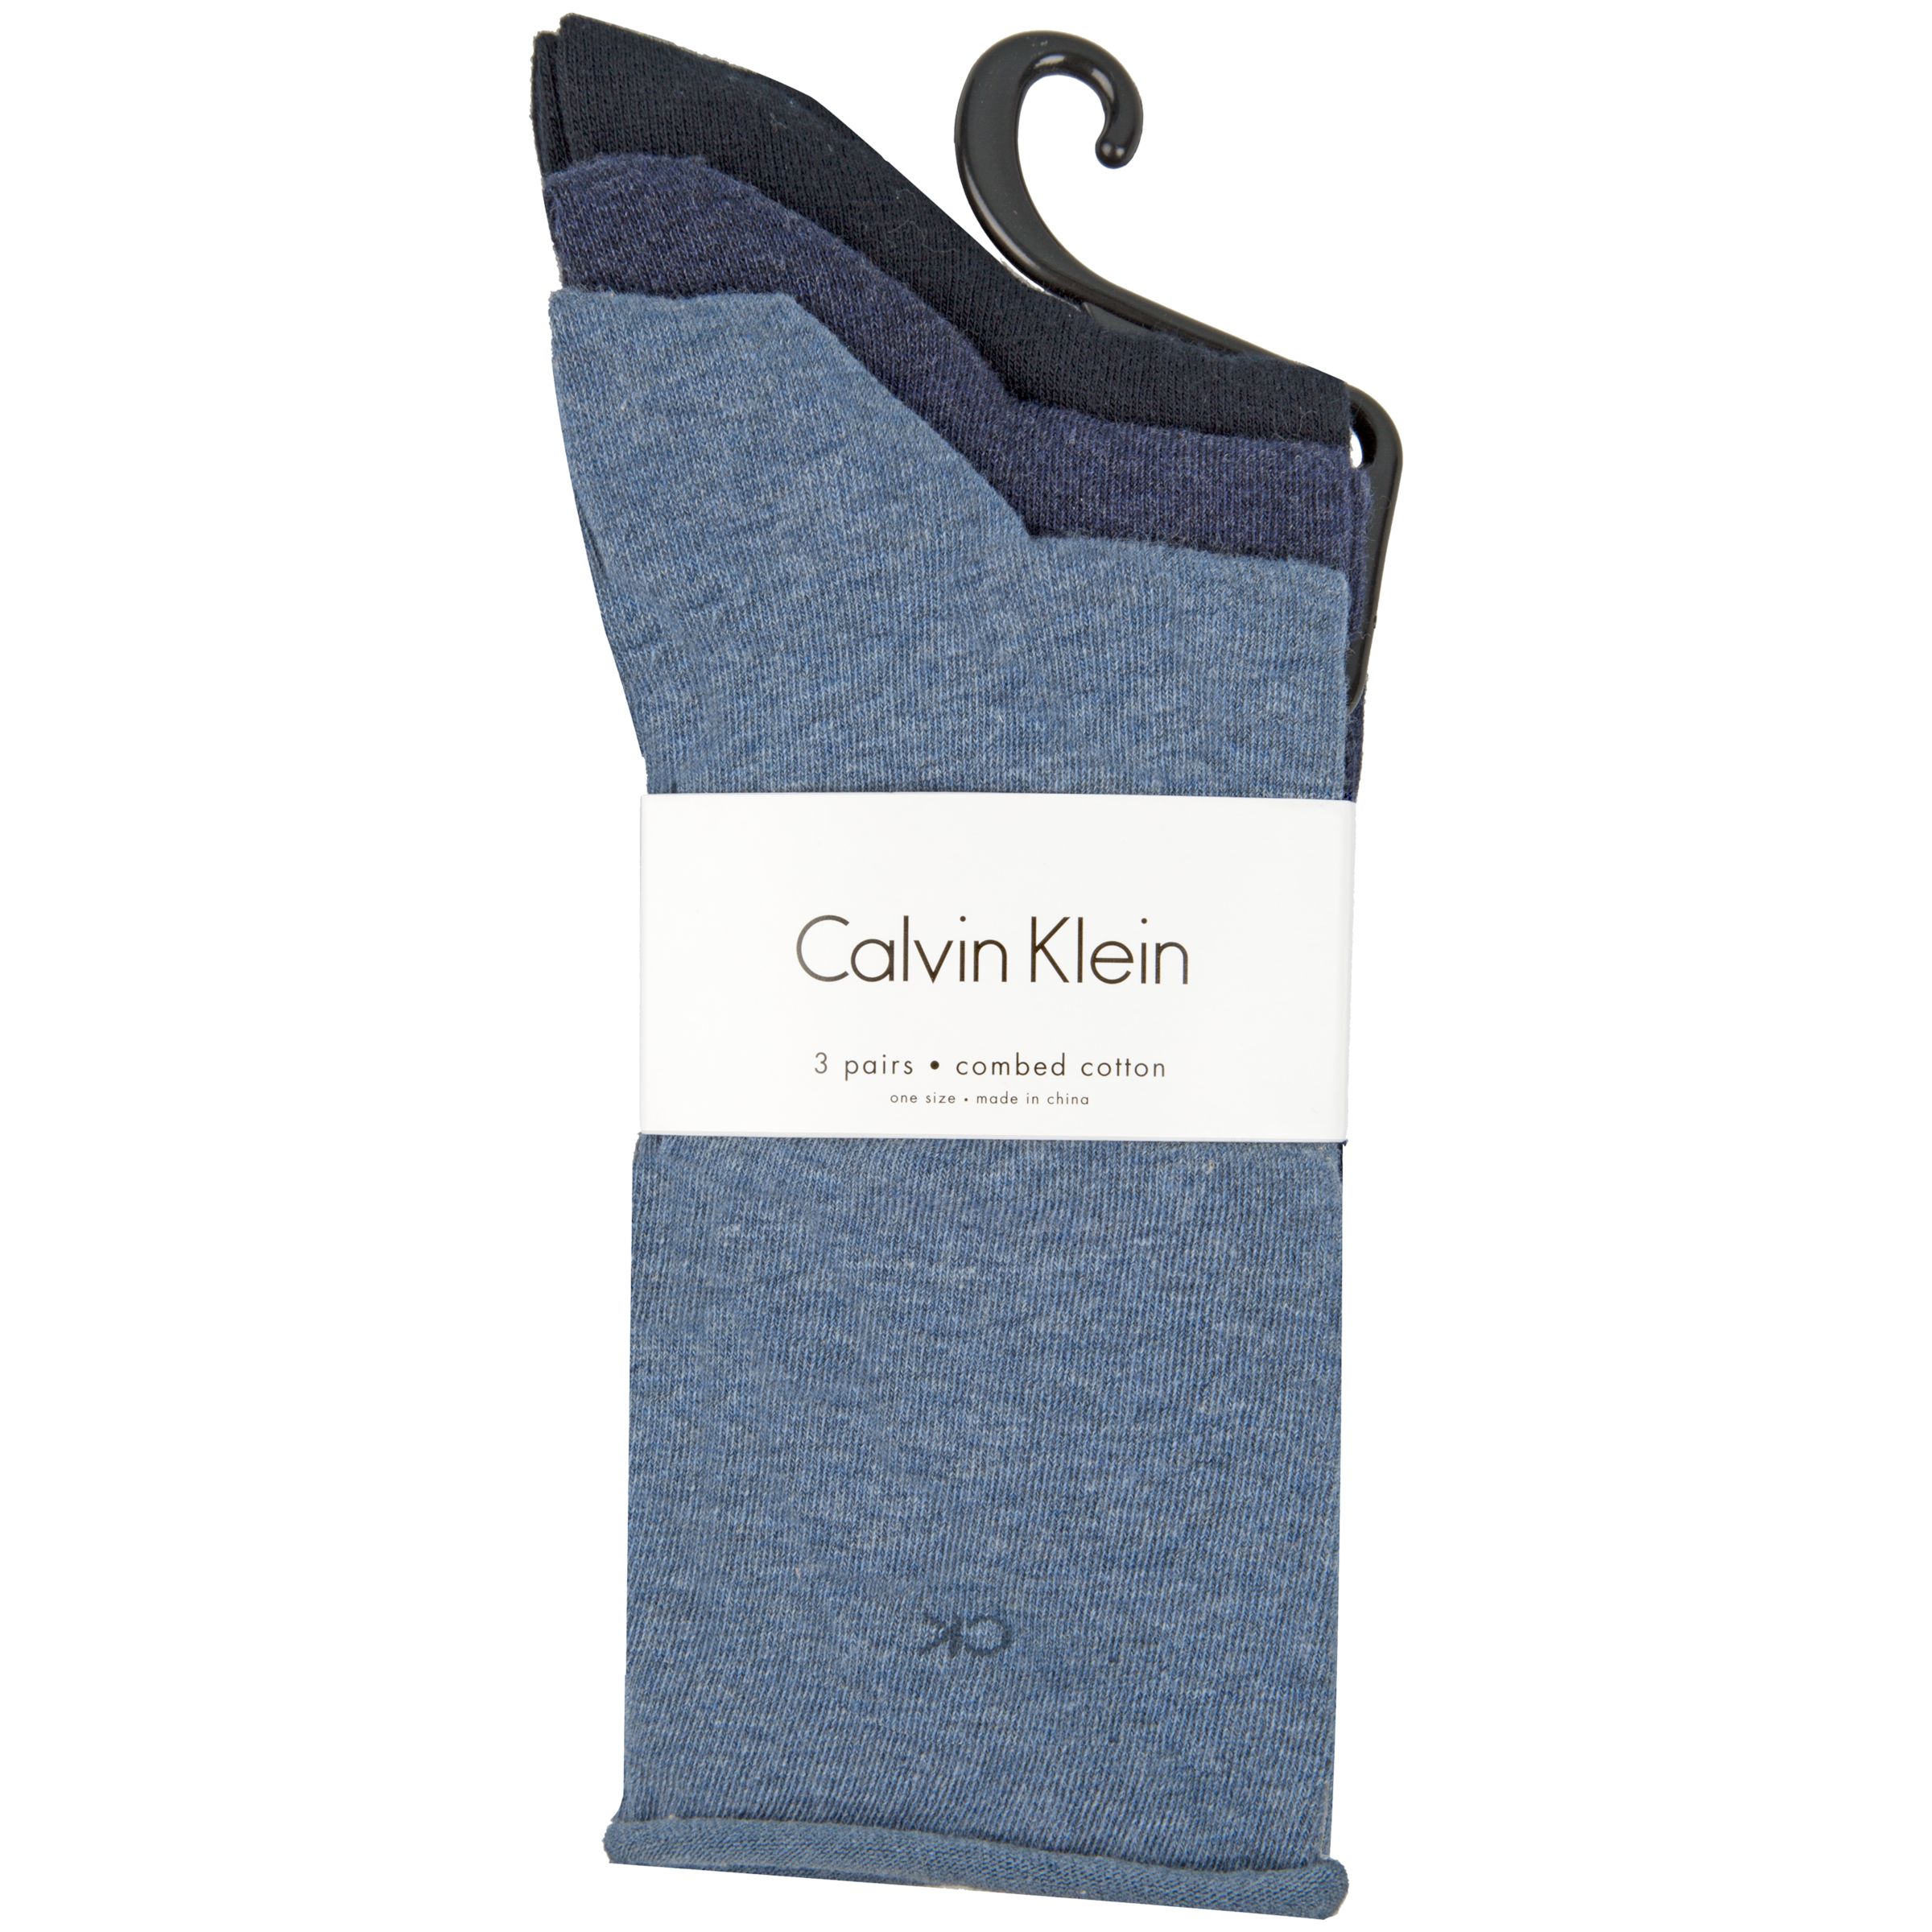 Calvin Klein Roll Top Crew Socks, Pack of 3, Denim/Navy